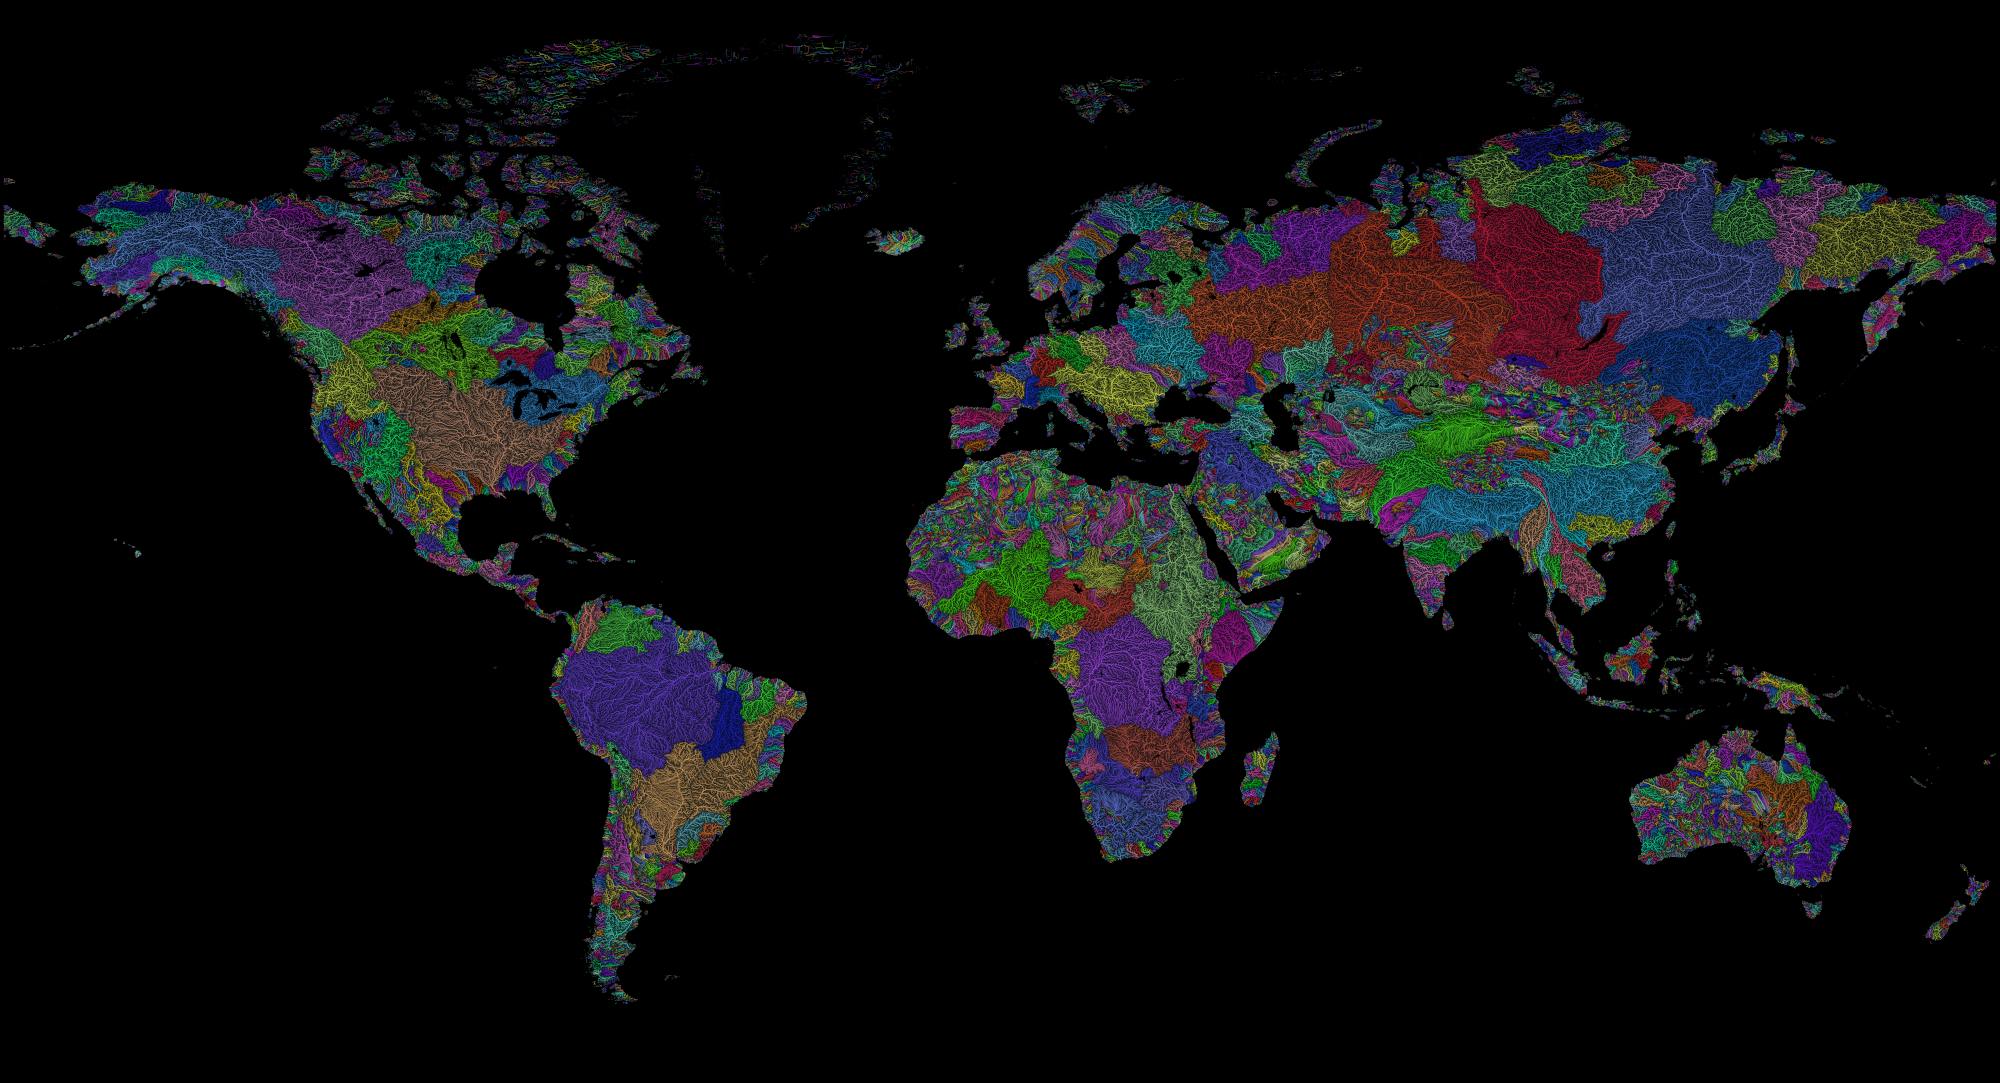 Colorful River Basin Maps – The Decolonial Atlas